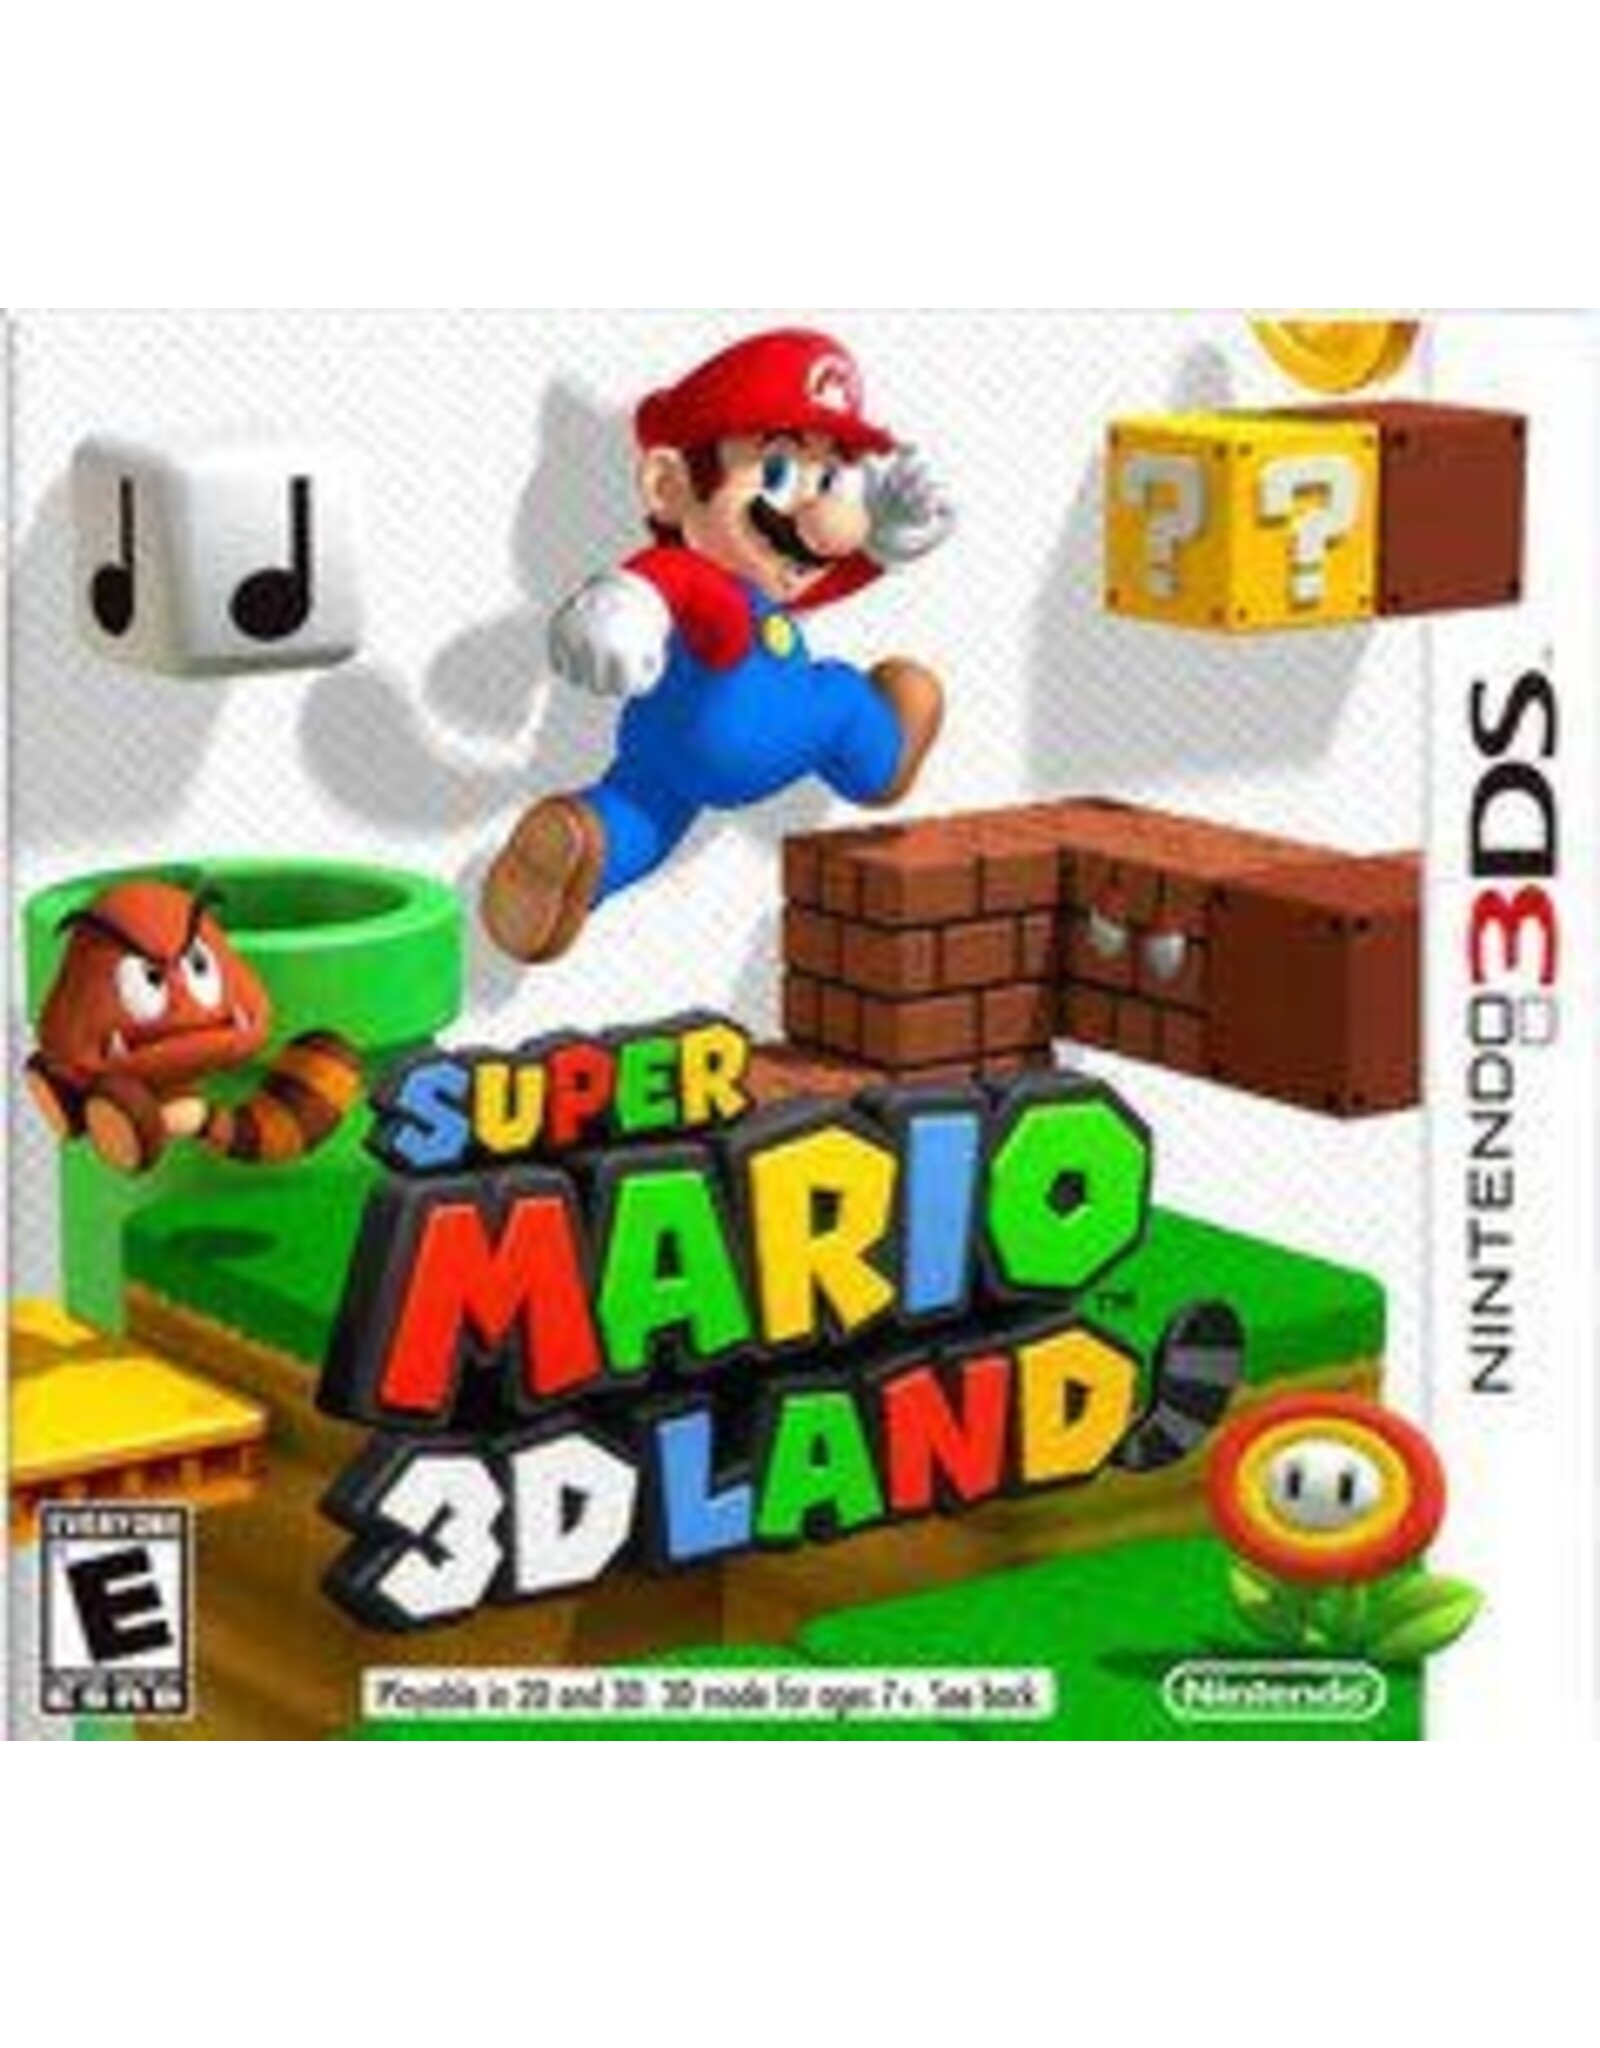 Nintendo 3DS Super Mario 3D Land (Cart Only)